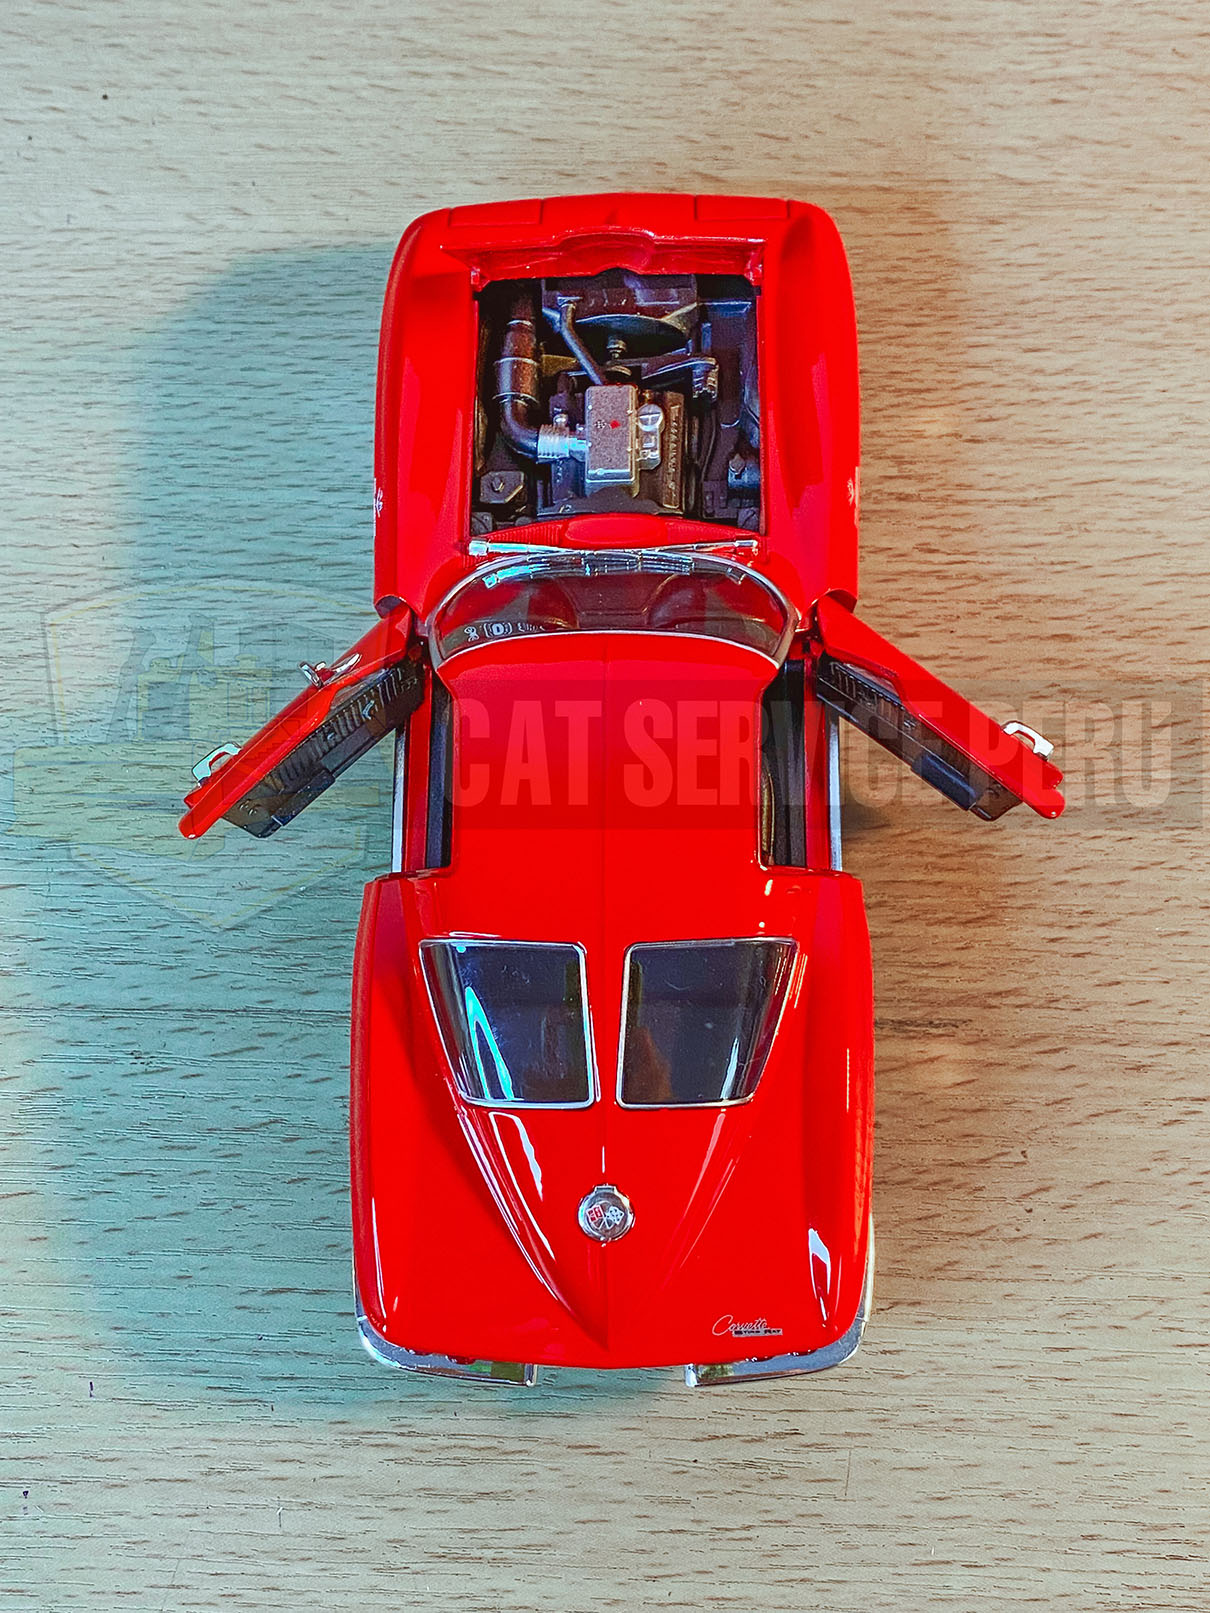 49-0426B1 Chevrolet Car 1963 Corvette Scale 1:24 (Discontinued Model)